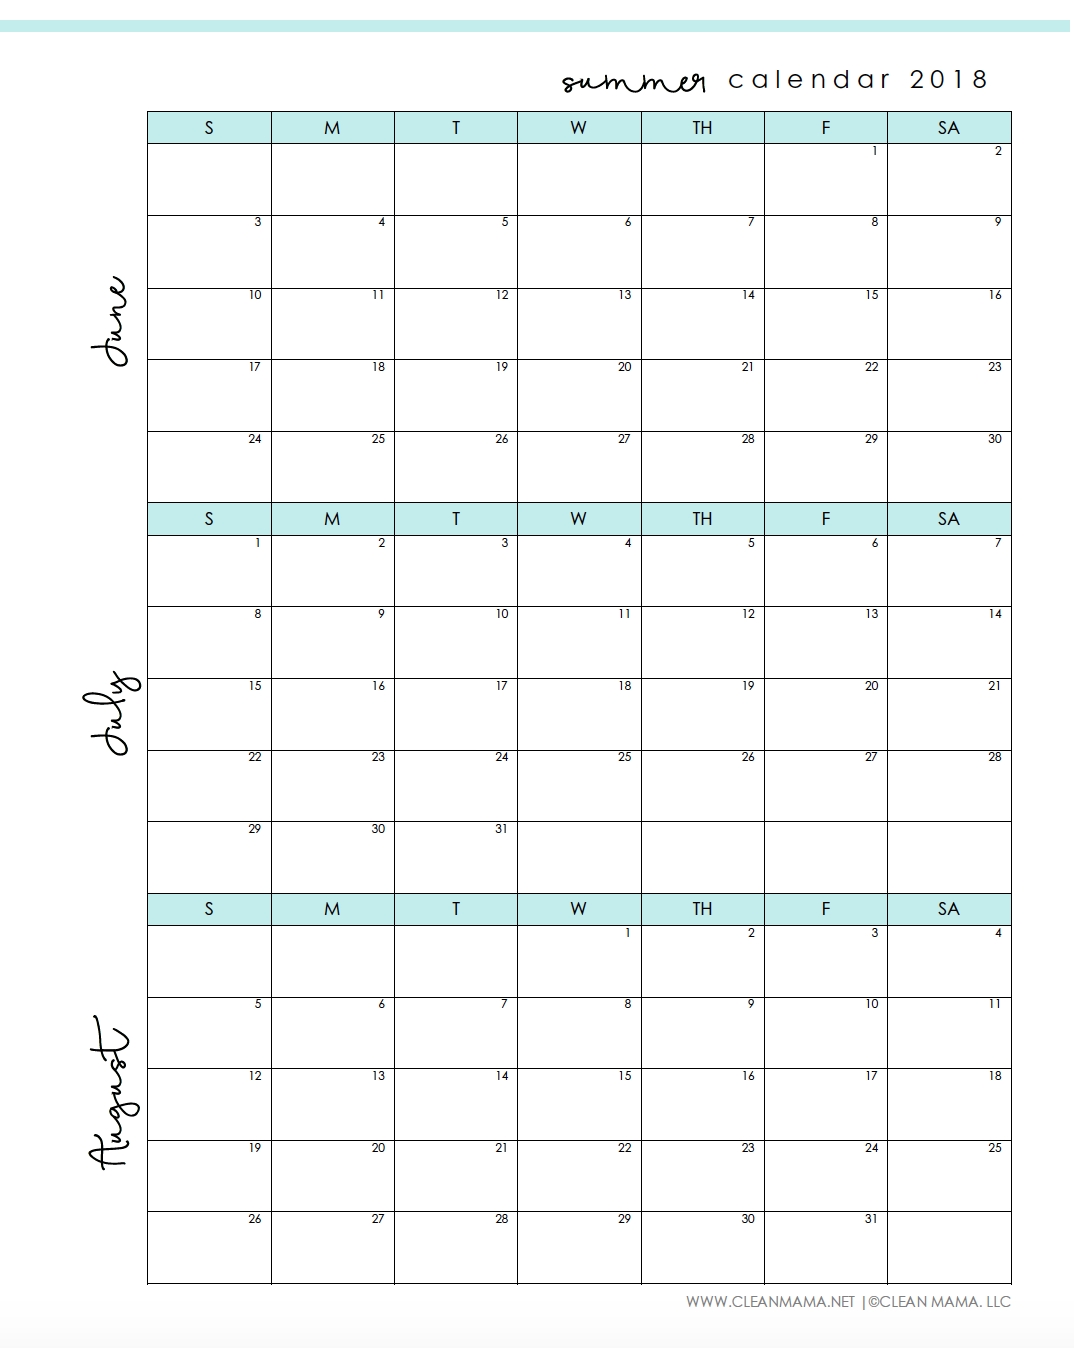 Free Printable : Summer 2018 Calendar - Clean Mama with regard to Blank 12 Month Seasonal Calendar